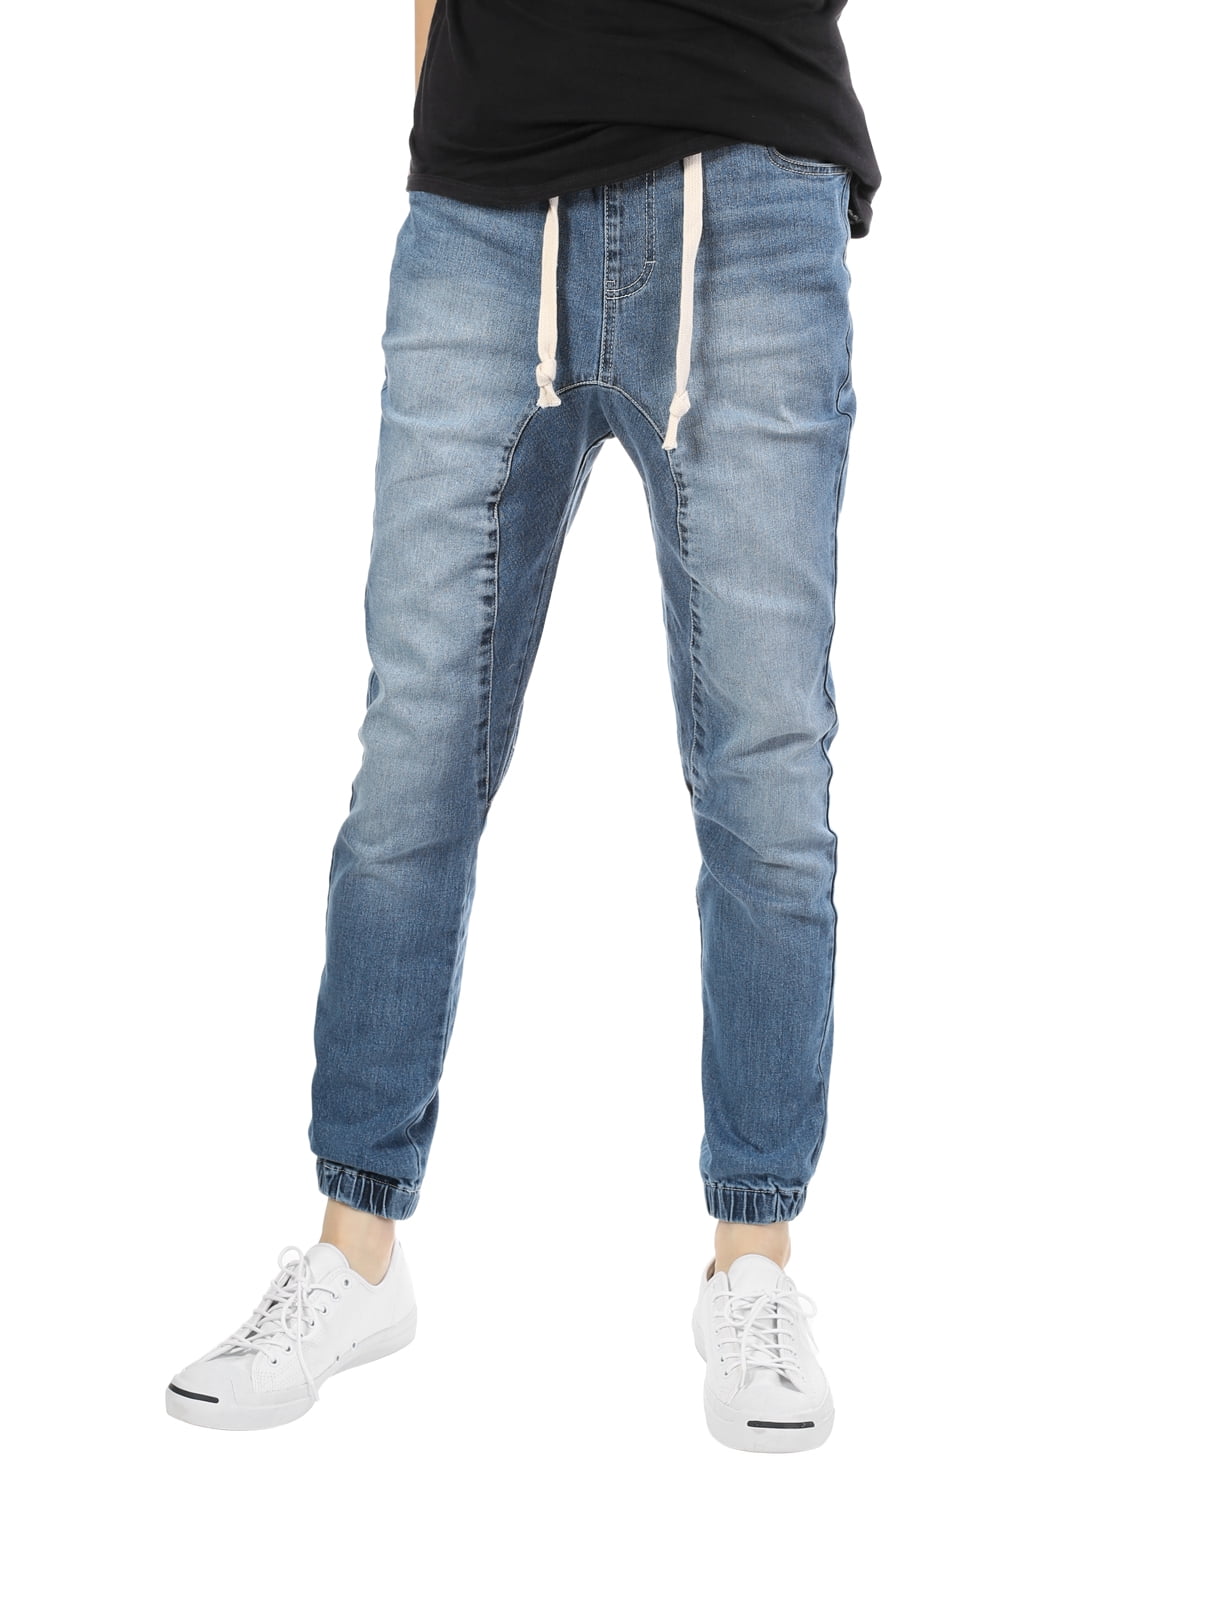 jogger jeans walmart